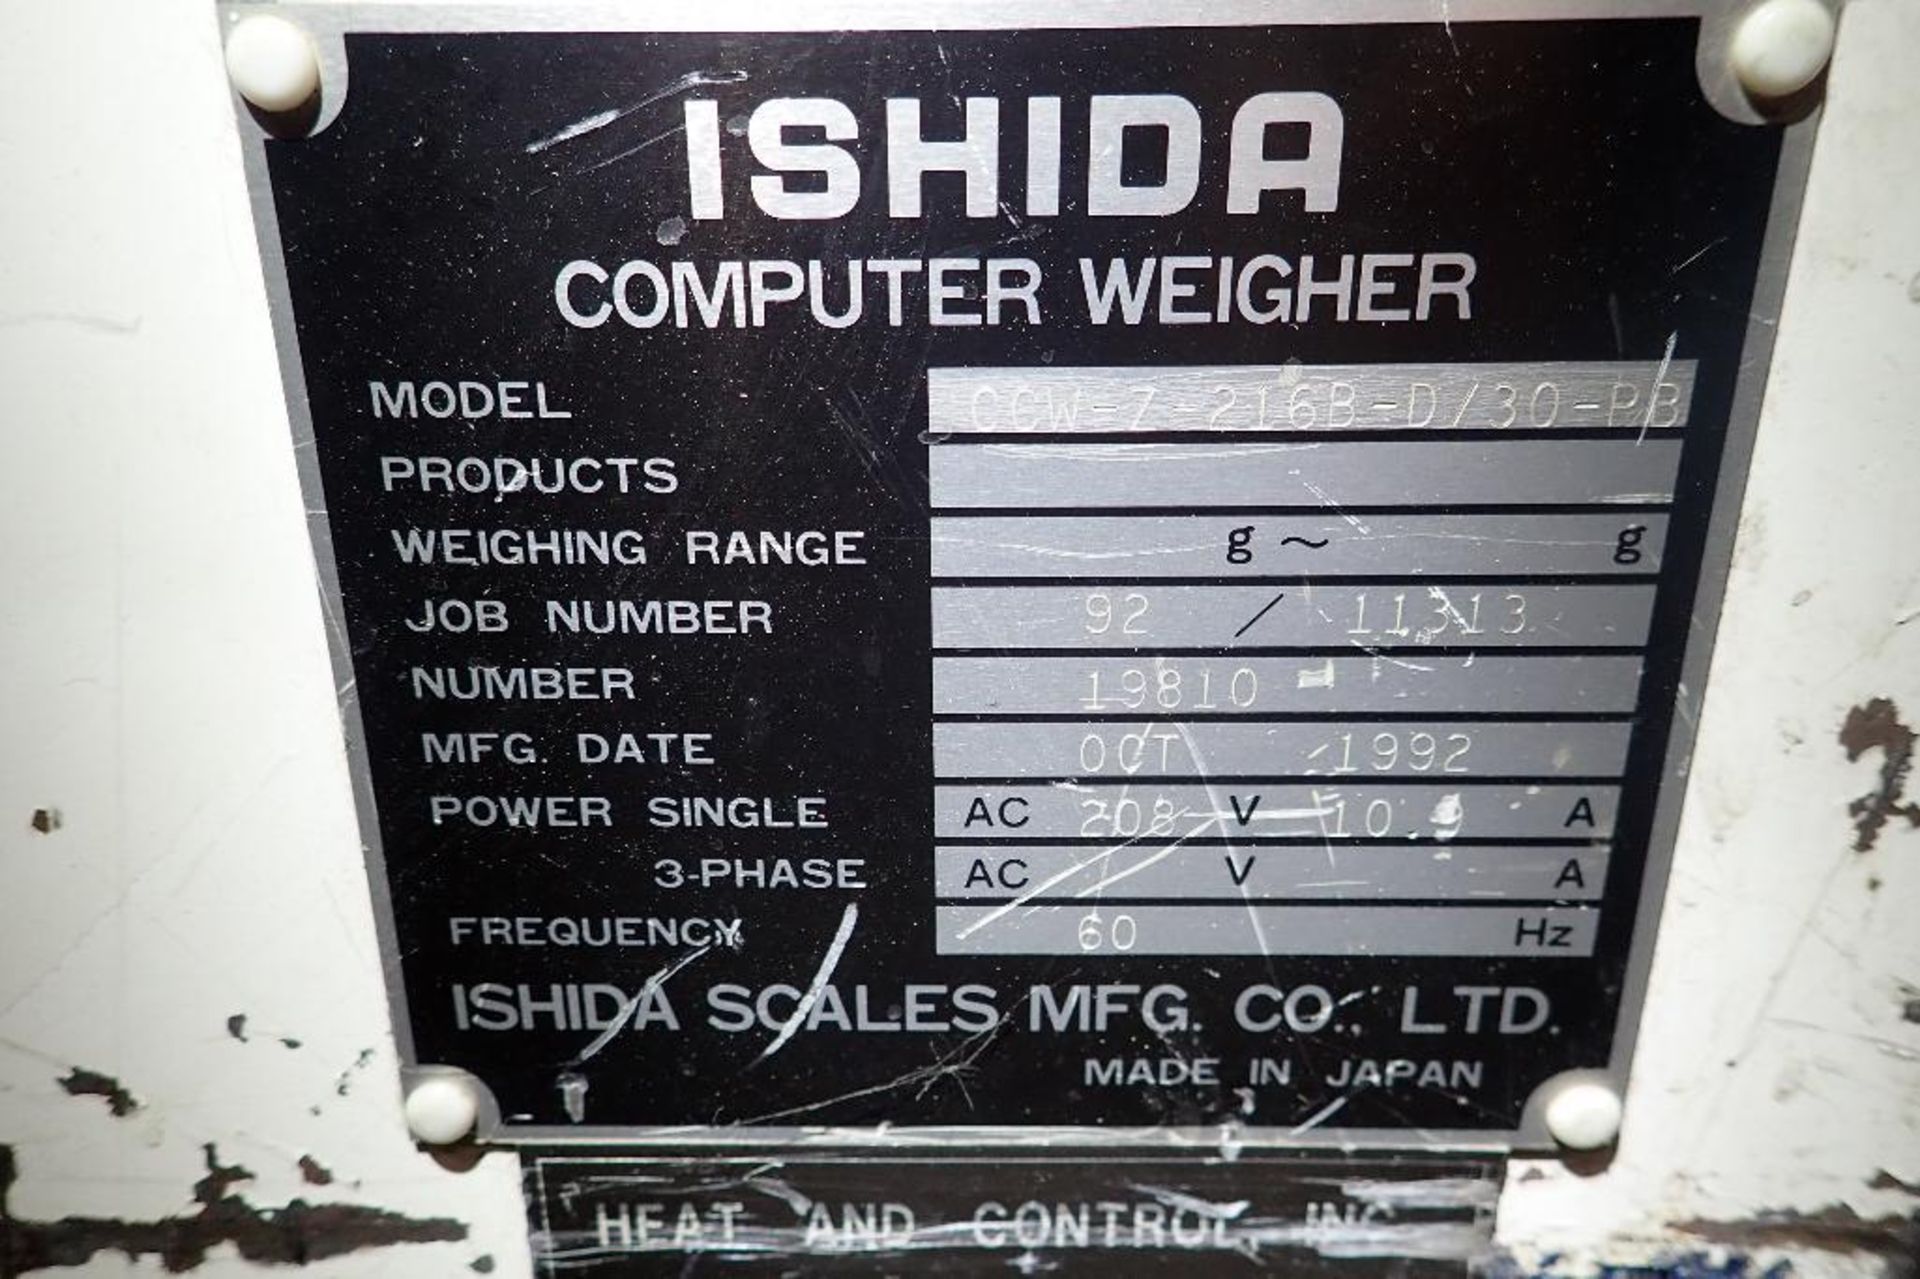 1992 Ishida 16 head scale, Model CCW-Z-216B-D/30-PB, SN 19810. **Rigging Fee: $200** (Located in 370 - Image 5 of 7